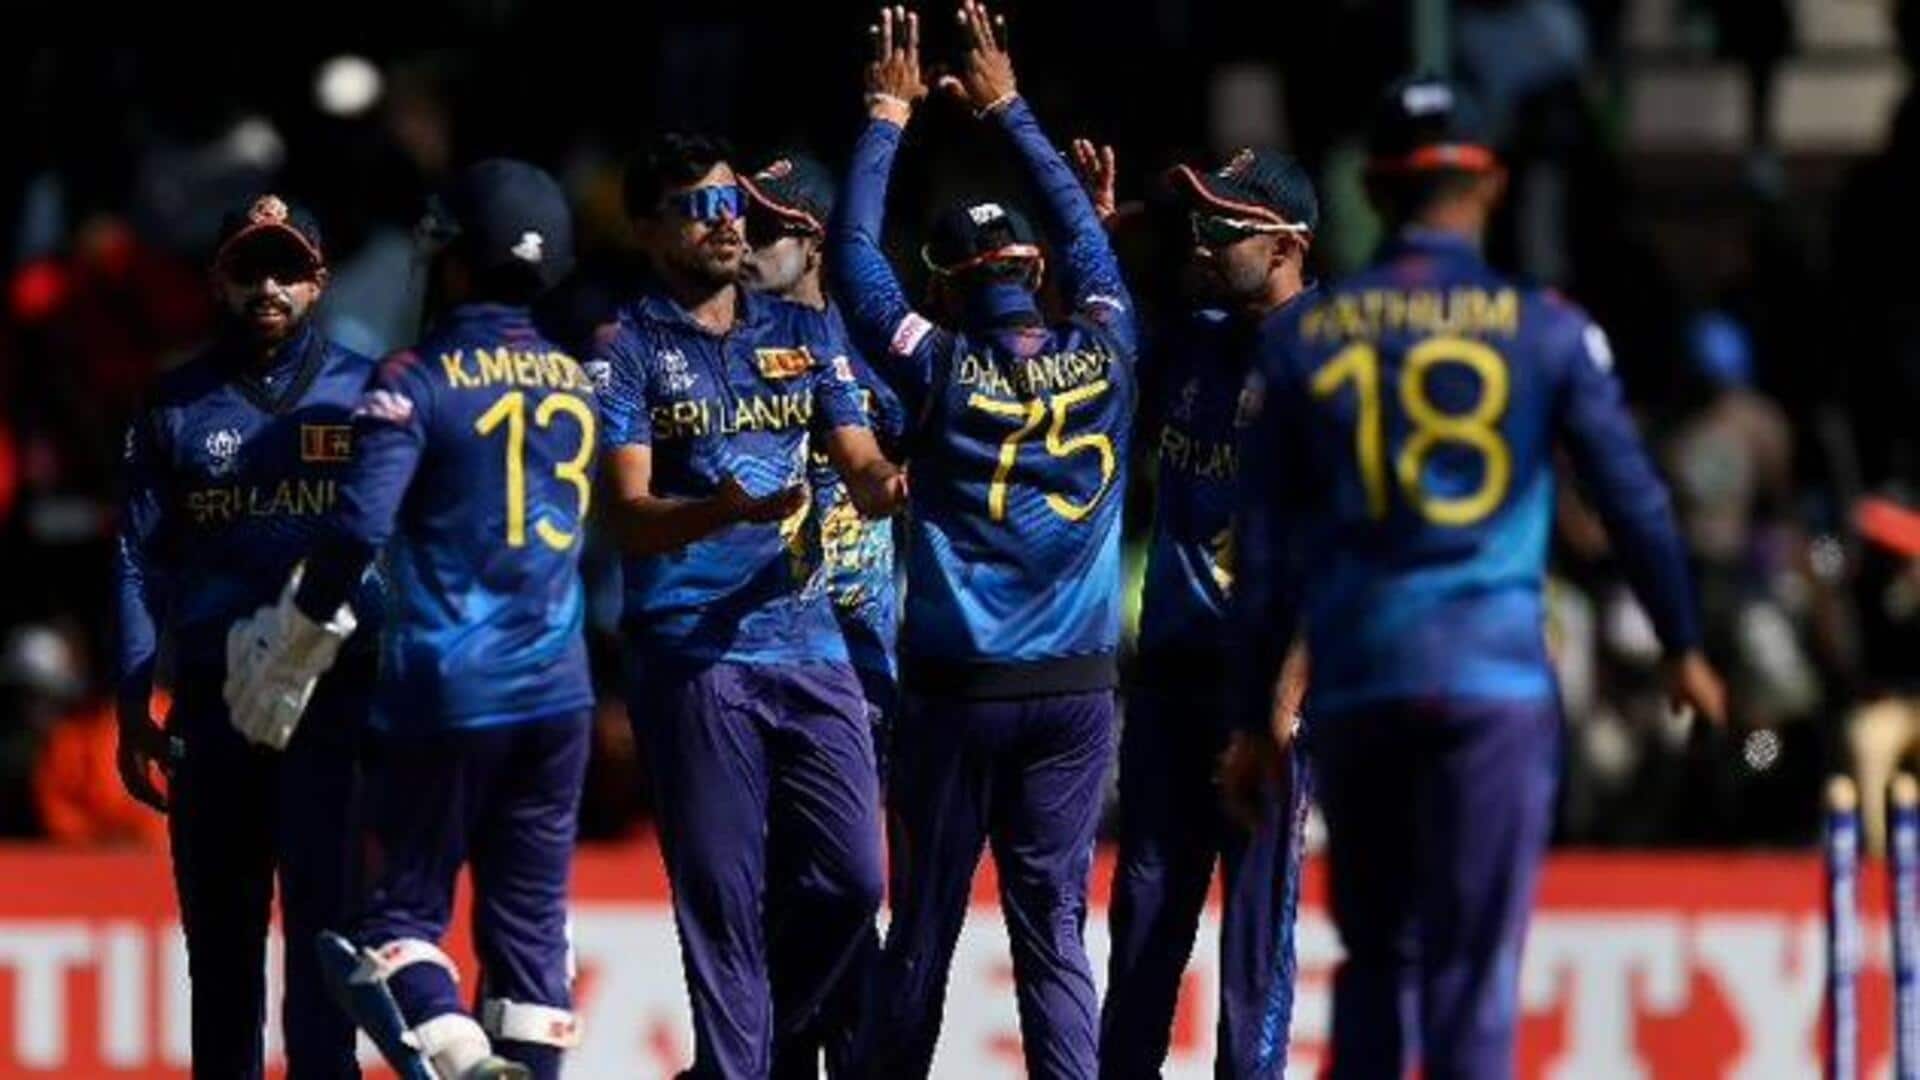 CWC Qualifiers: Maheesh Theekshana claims his third consecutive ODI four-fer